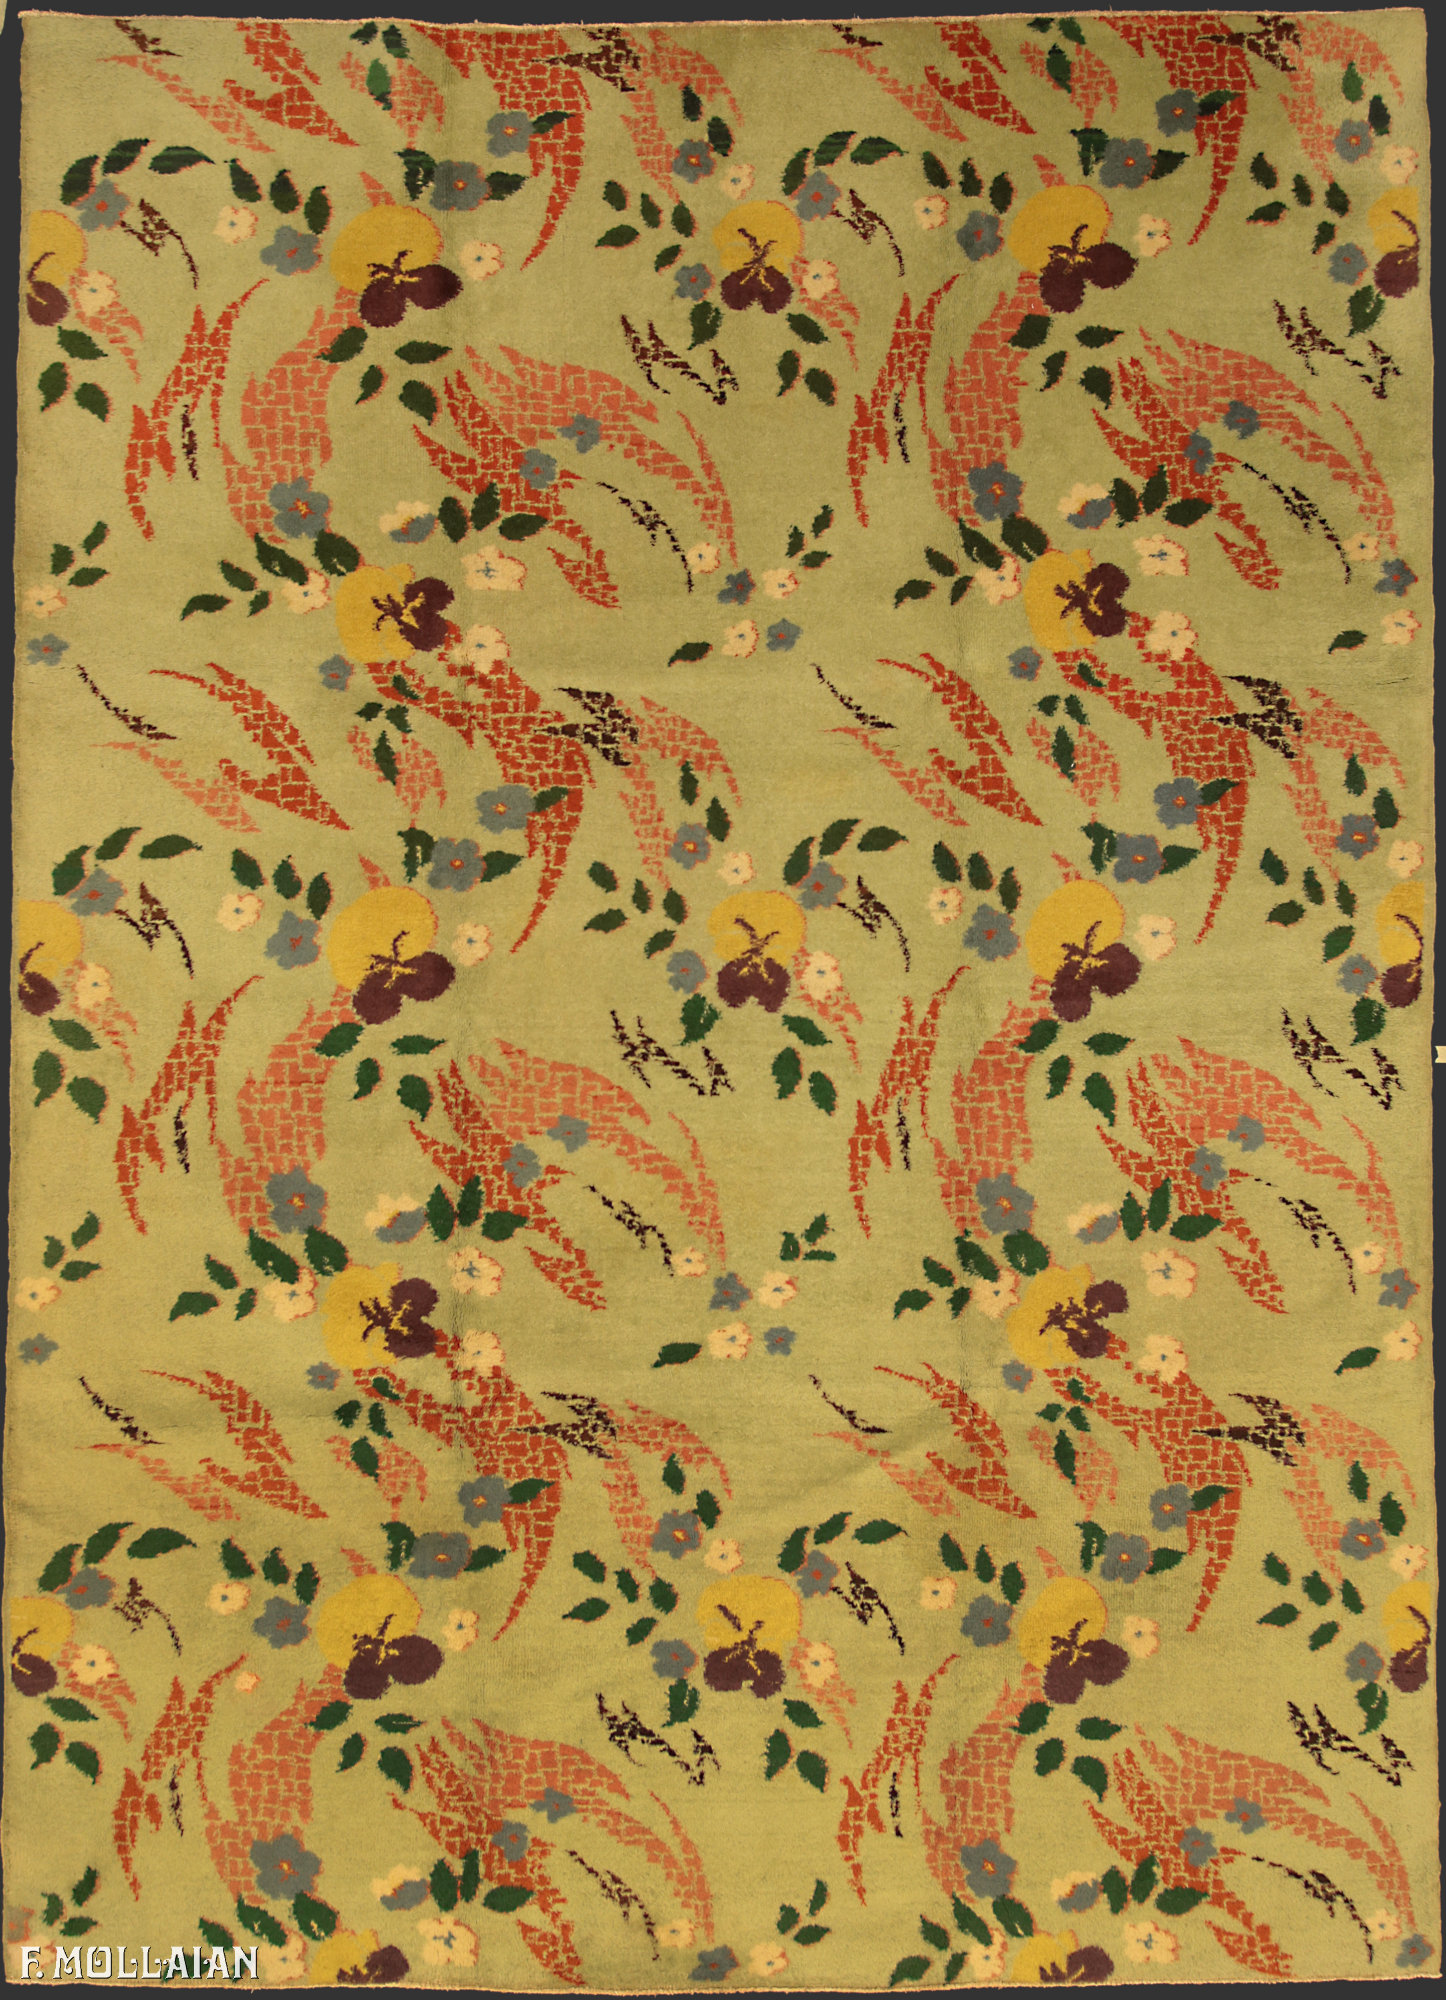 Semi-Antique Turkish Turk Decò Carpet n°:83227675